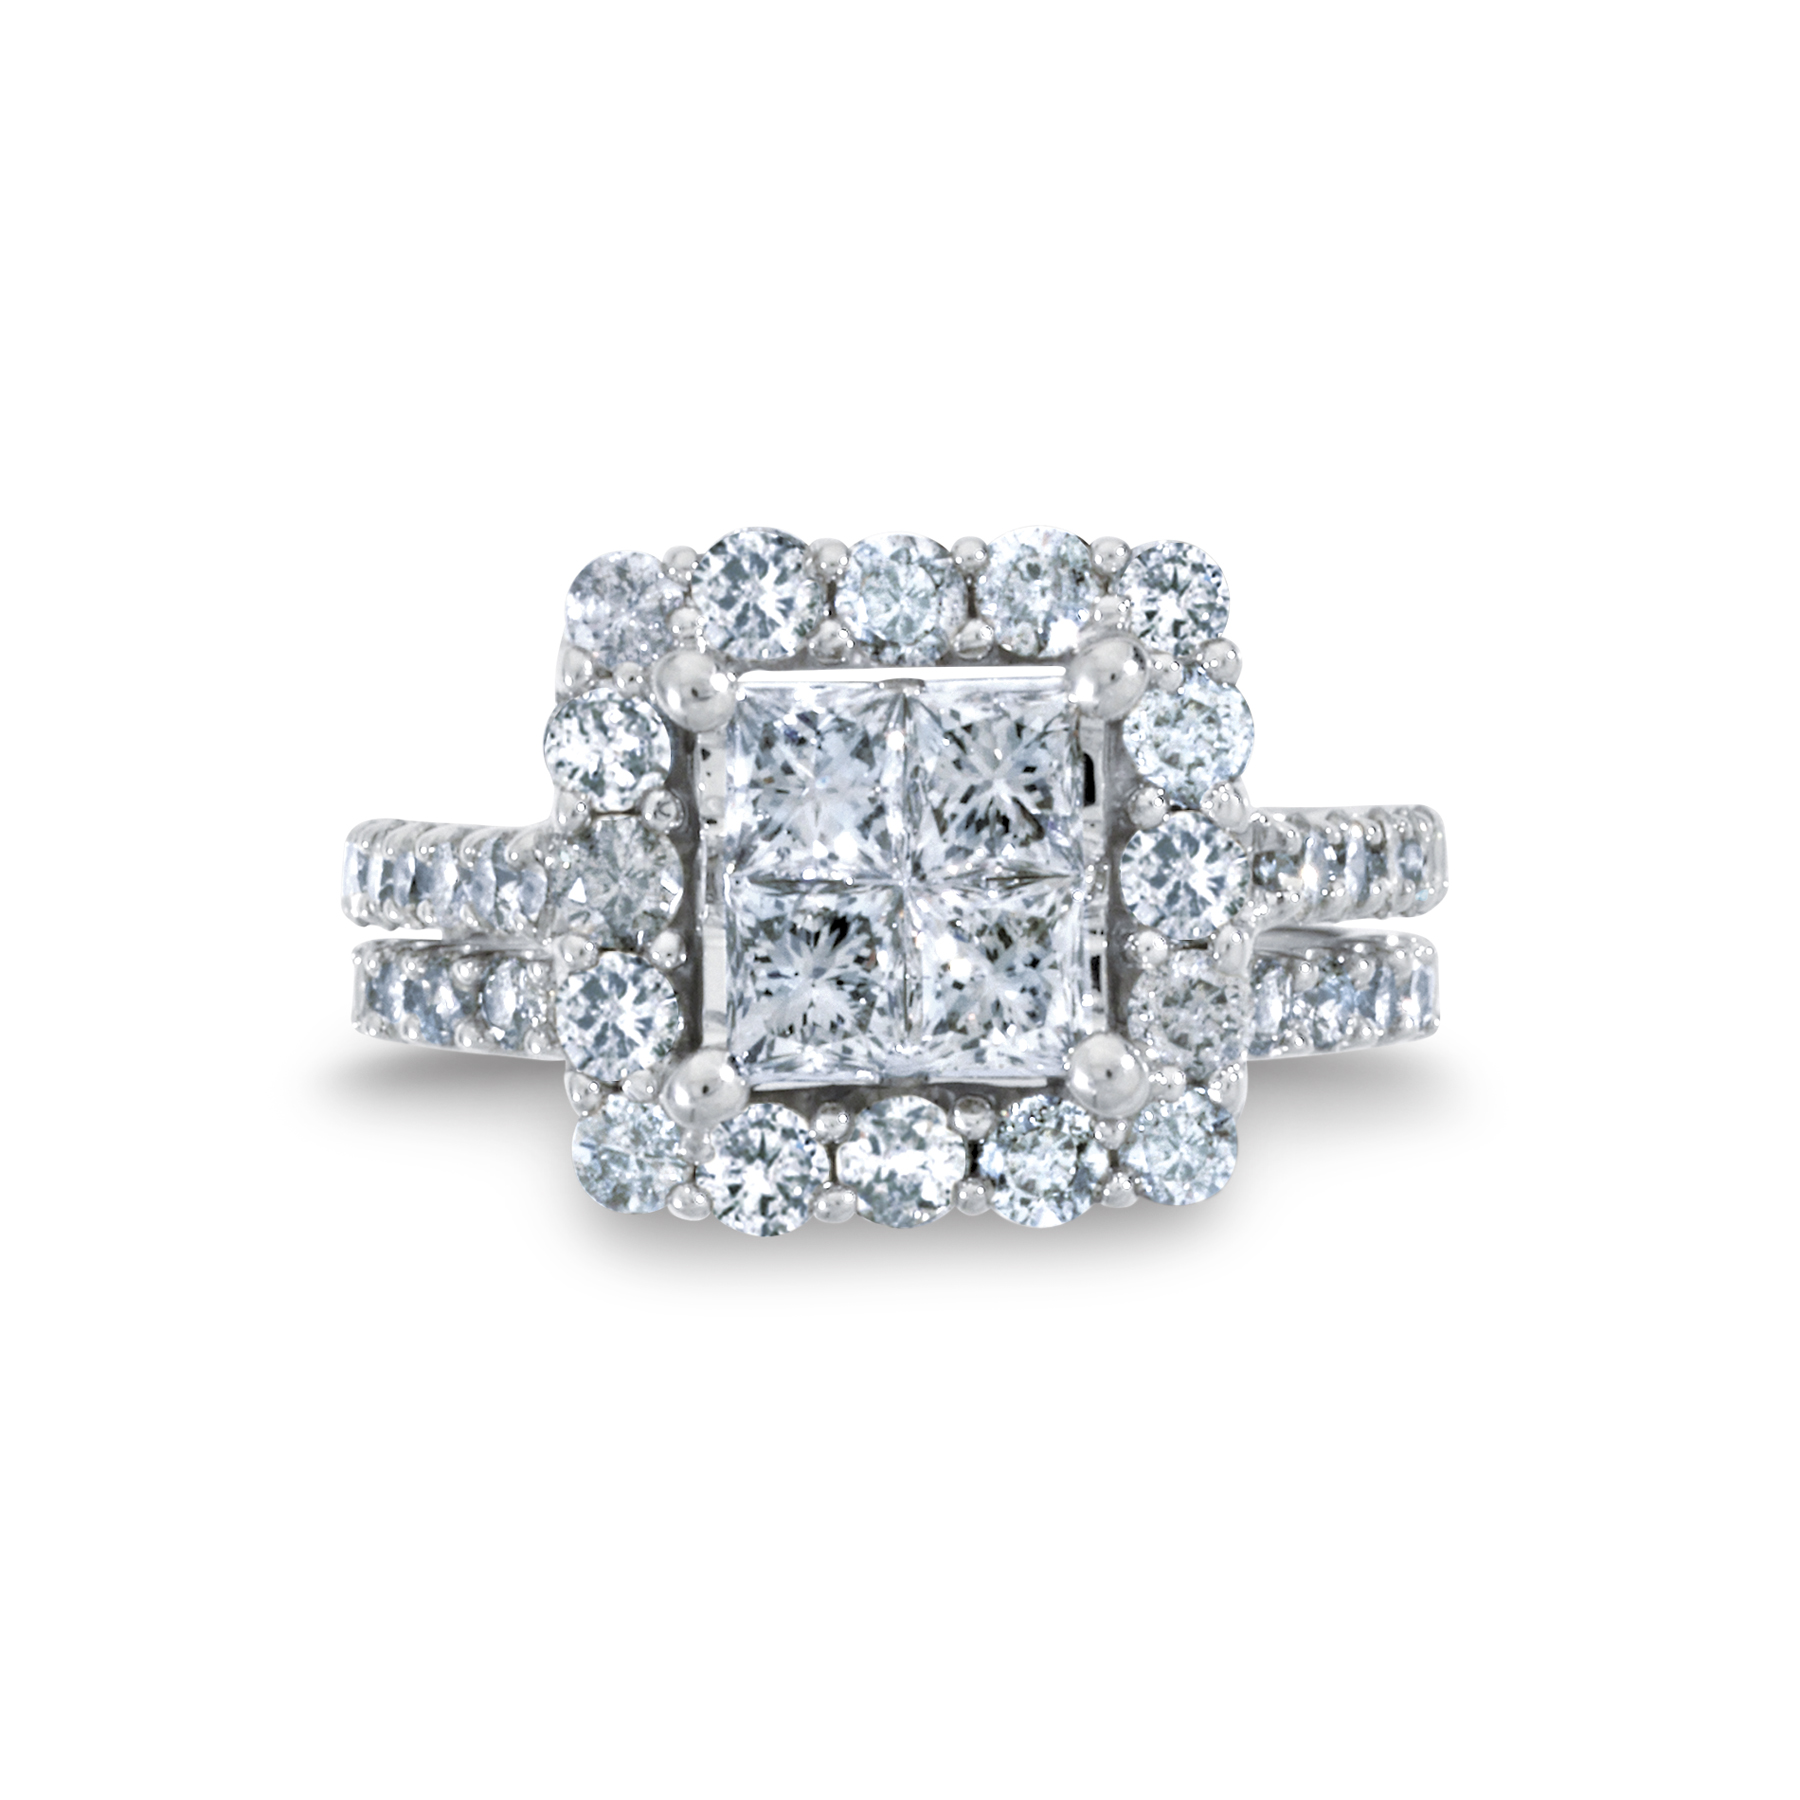 Sears diamond wedding rings